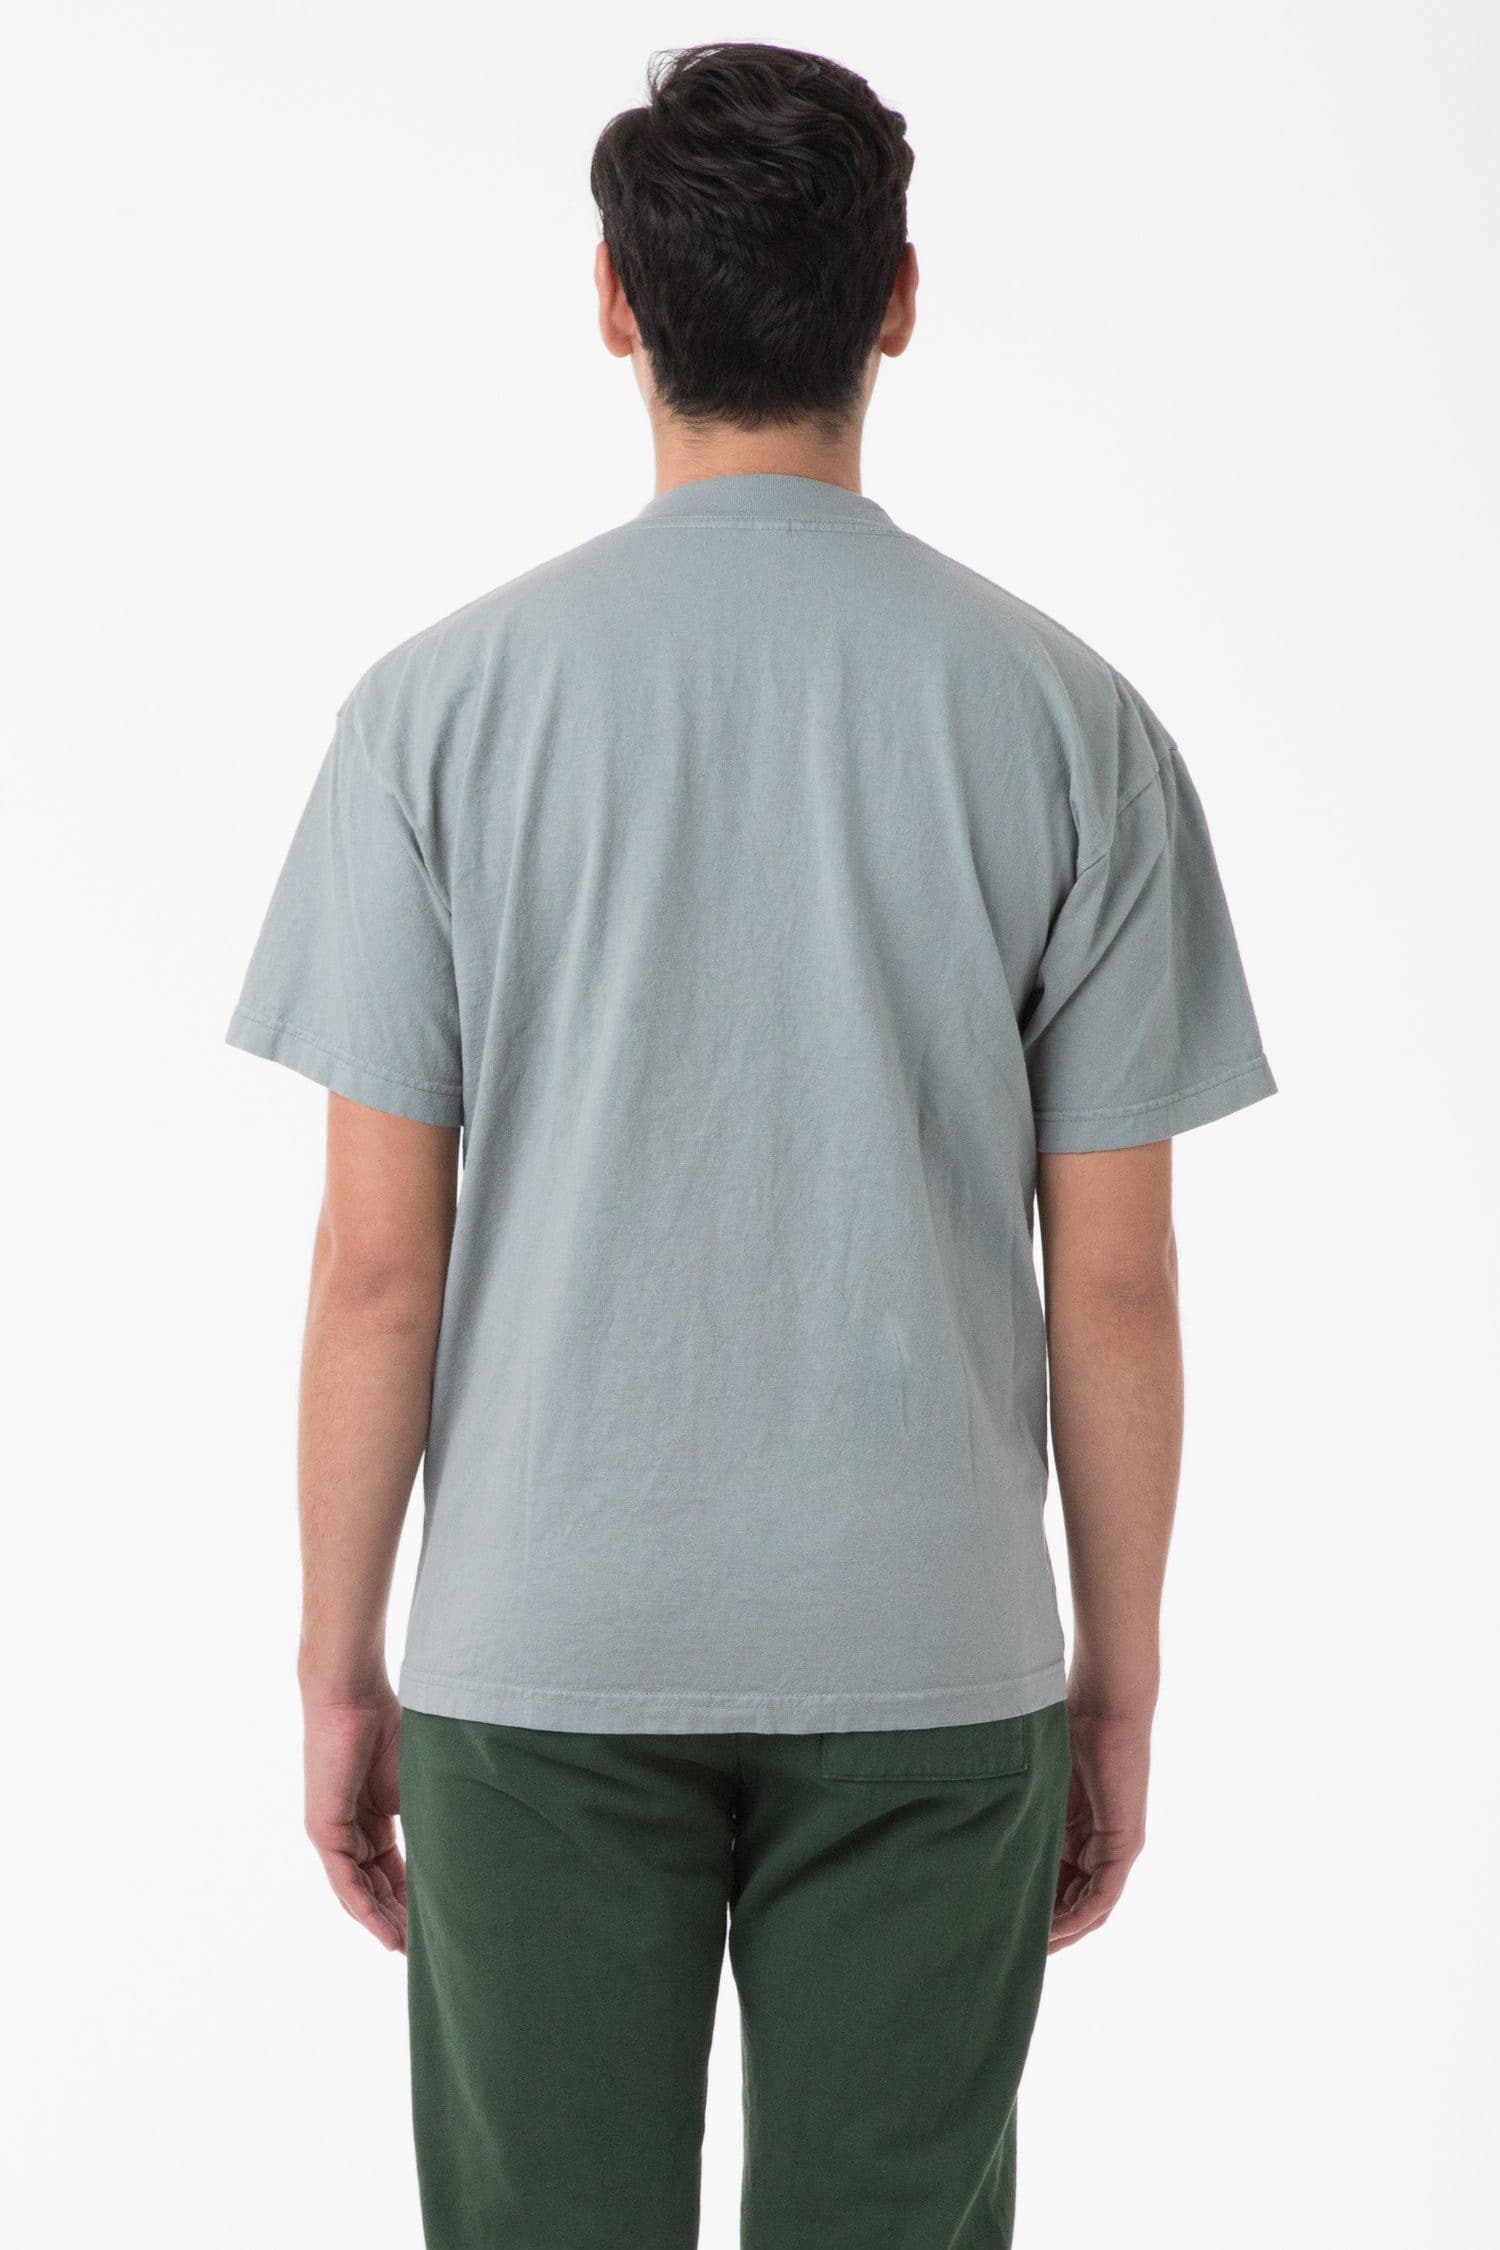 1405GD - Short Sleeve Garment Dye Mockneck T-Shirt